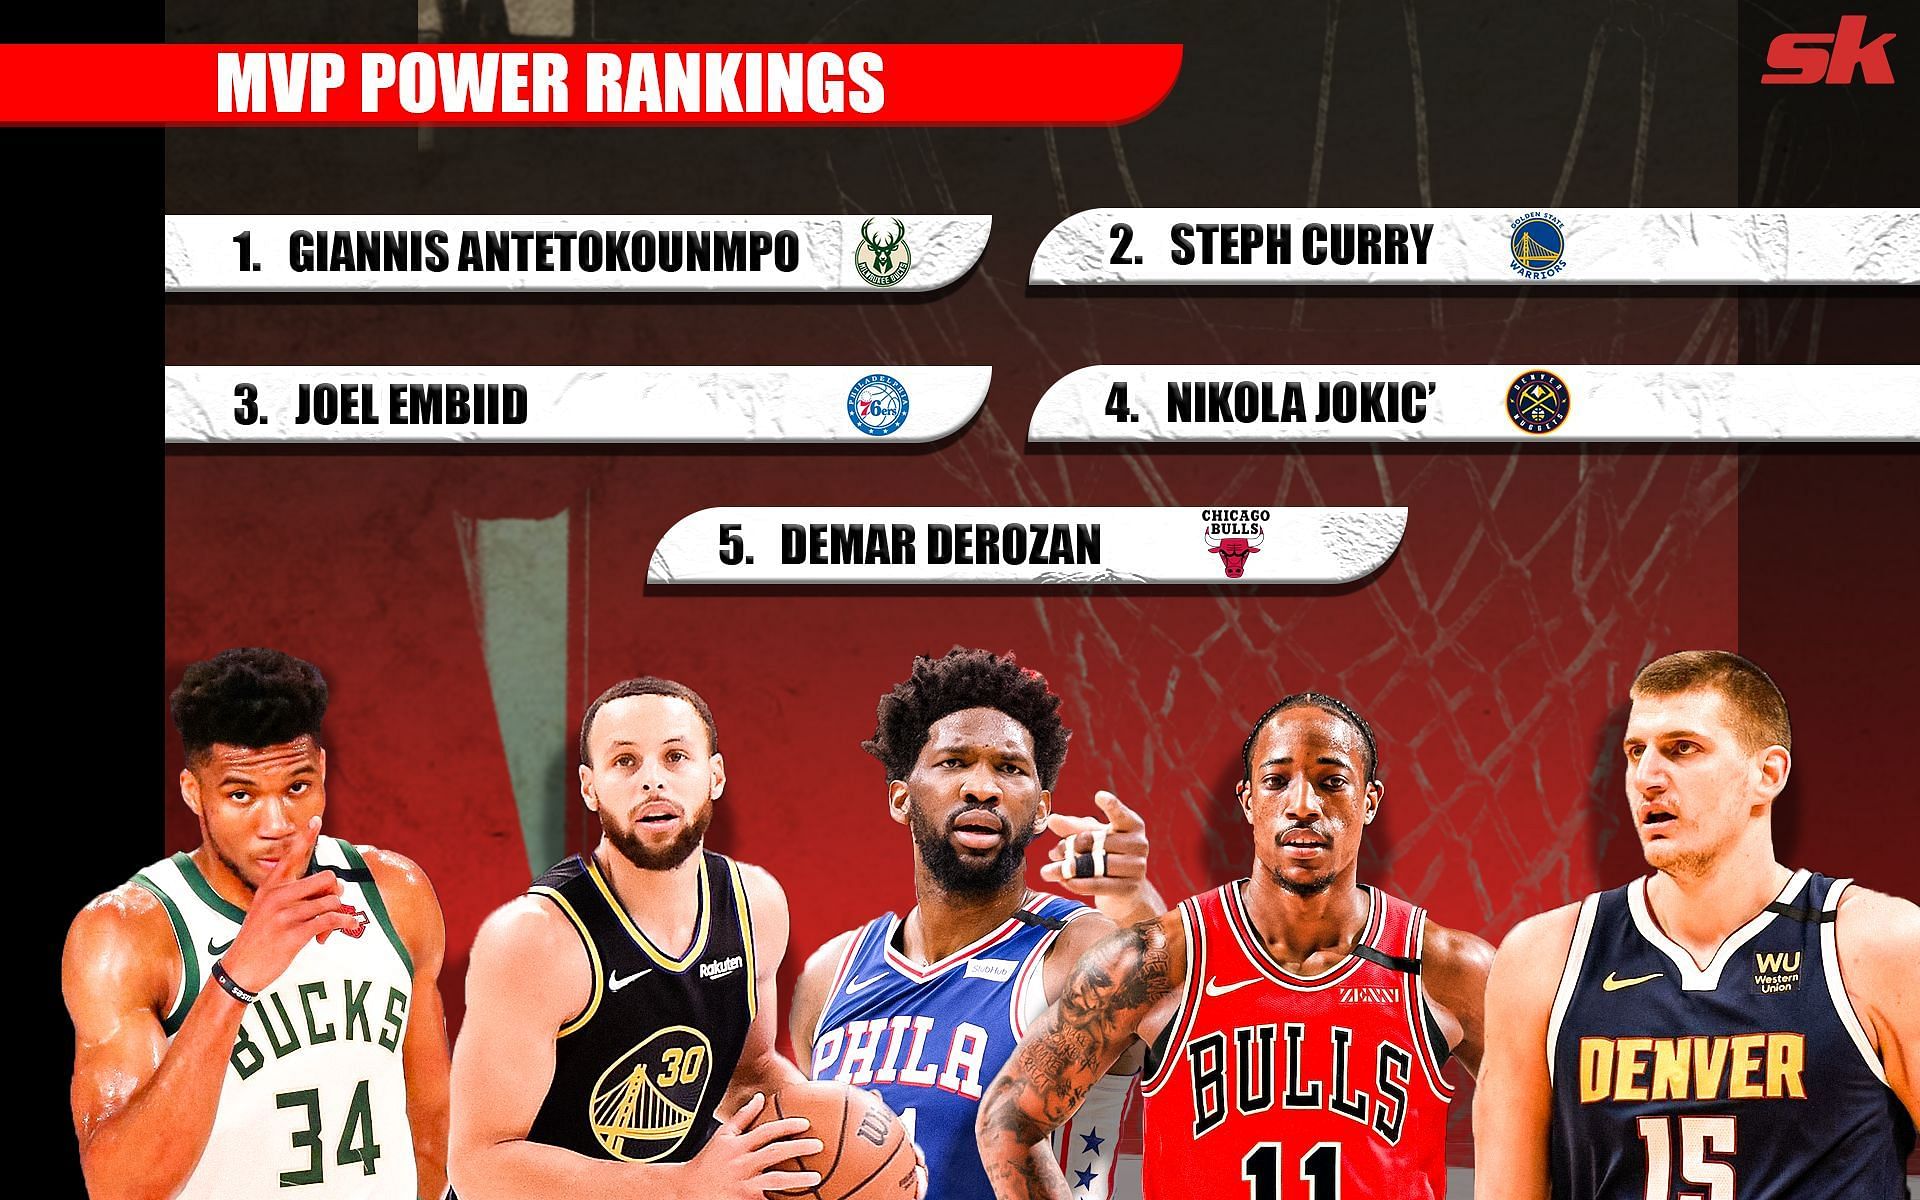 Latest NBA MVP Power Rankings by Sportskeeda